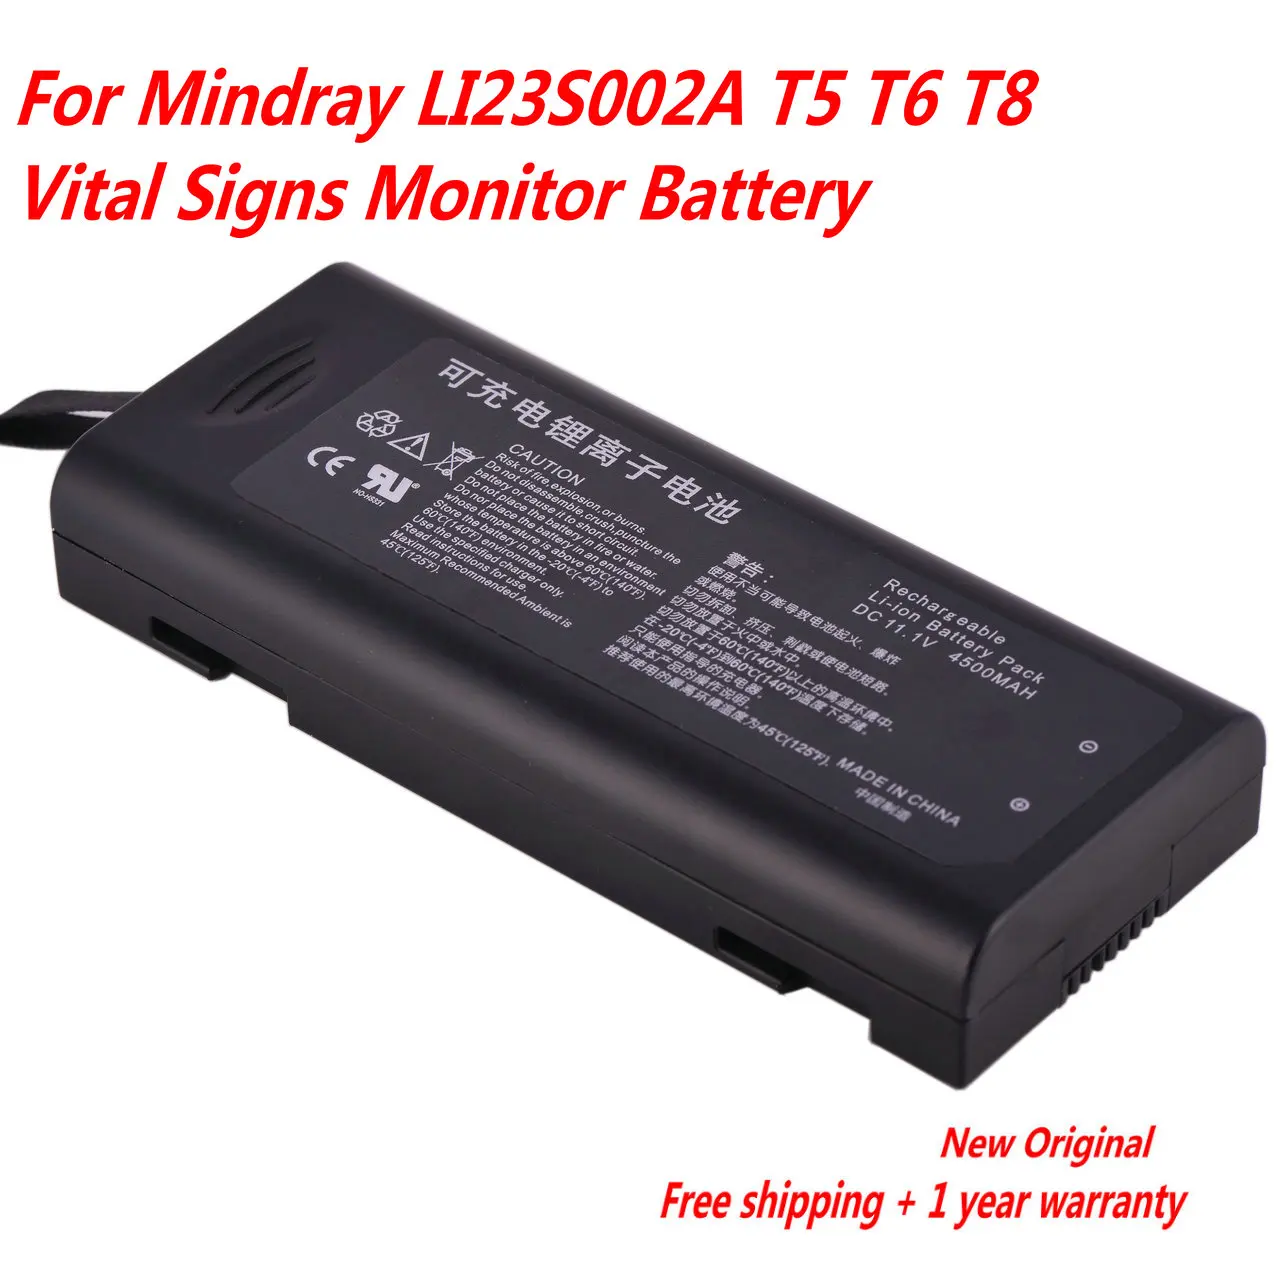 

High Quality 11.1V 4500mAh LI23S002A For Mindray T5 T6 T8 IPM10 8 Monitor R12 ECG Machine Vital Signs Monitor Battery